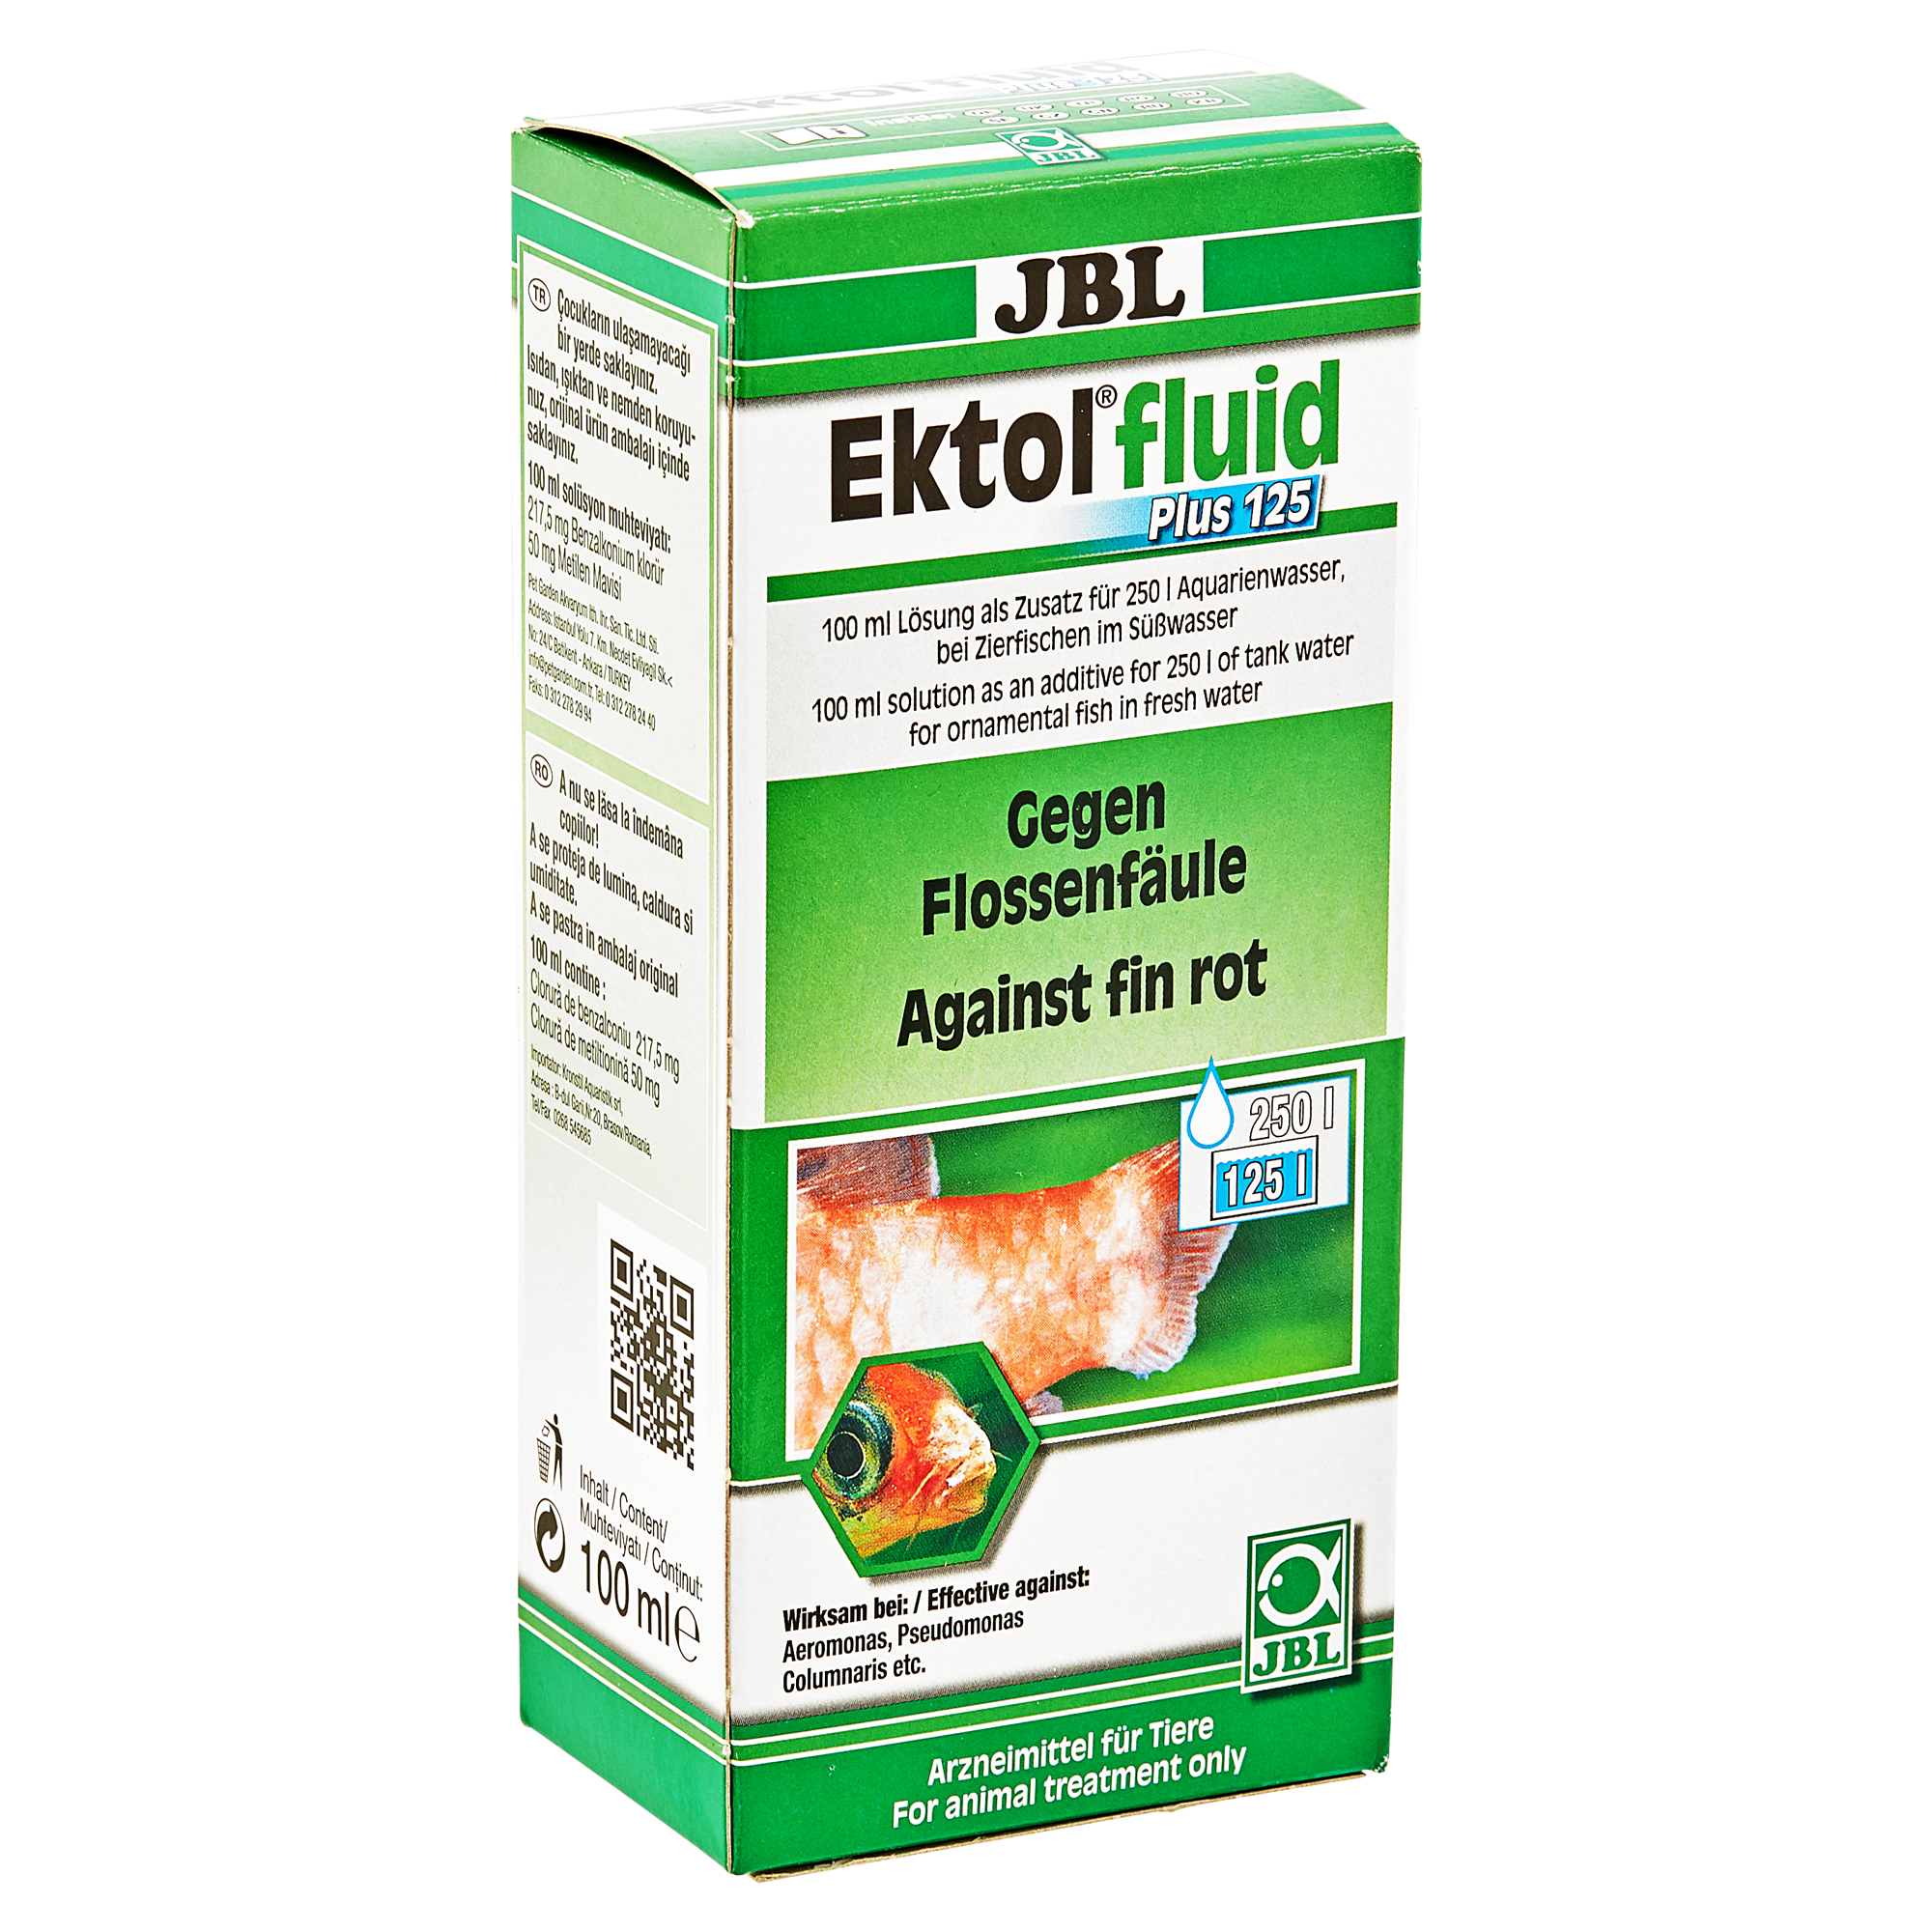 Fischarznei "Ektol fluid Plus 125" 100 ml + product picture